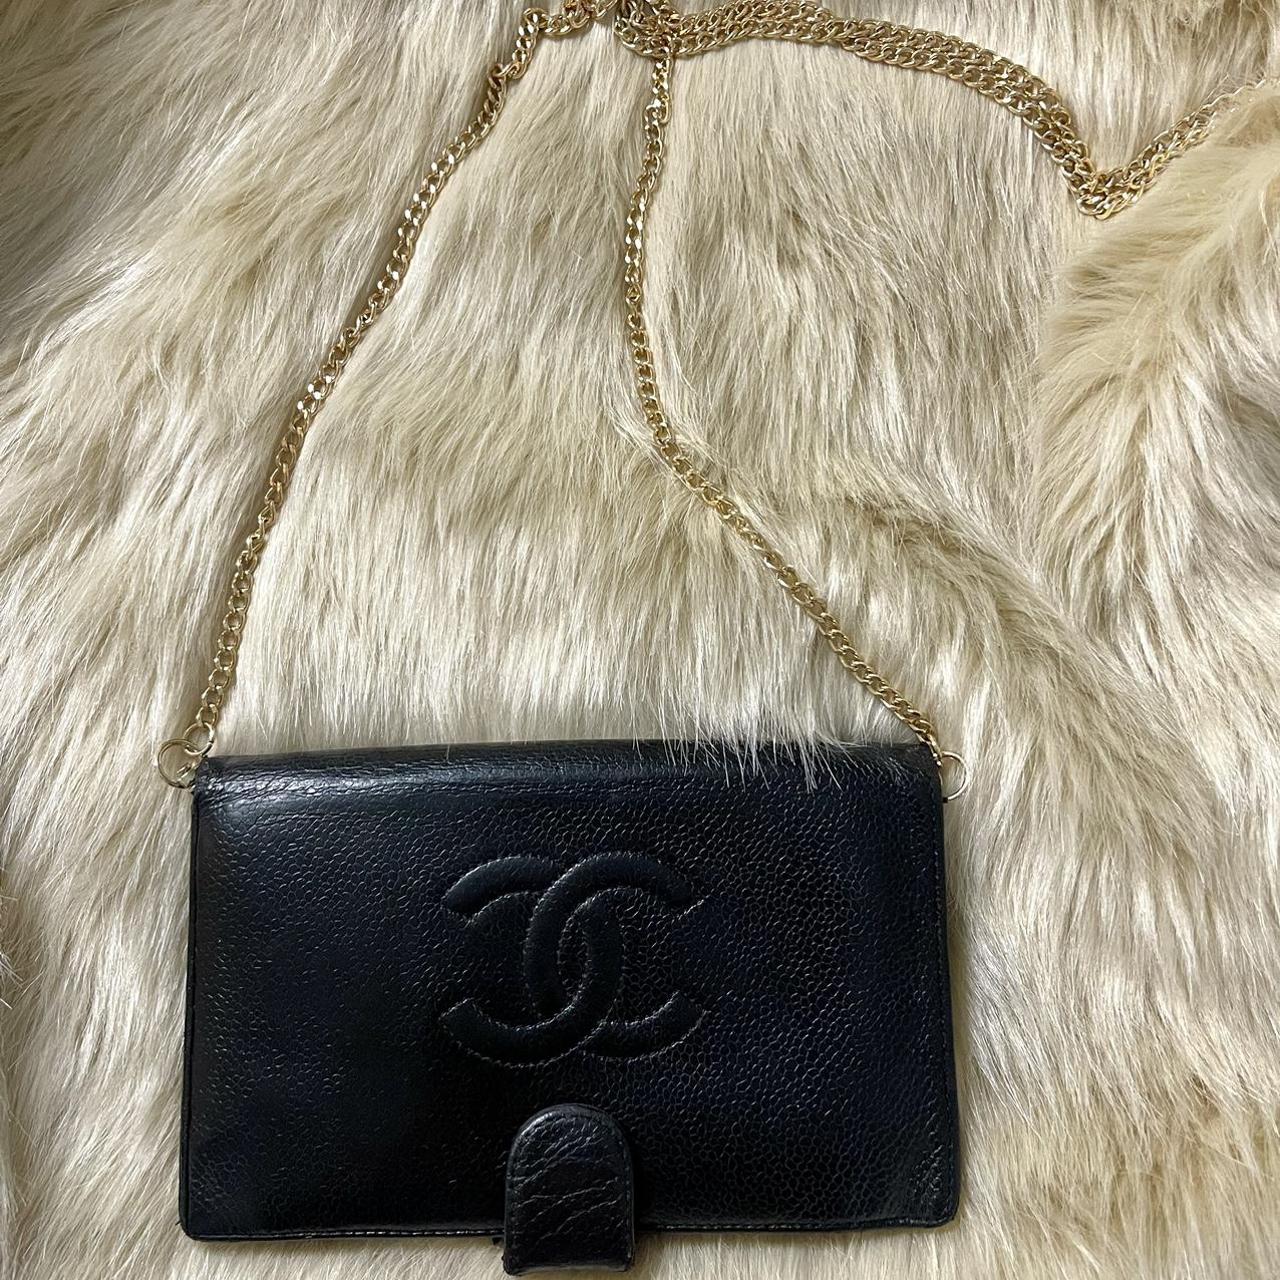 Authentic Chanel Black Wallet 